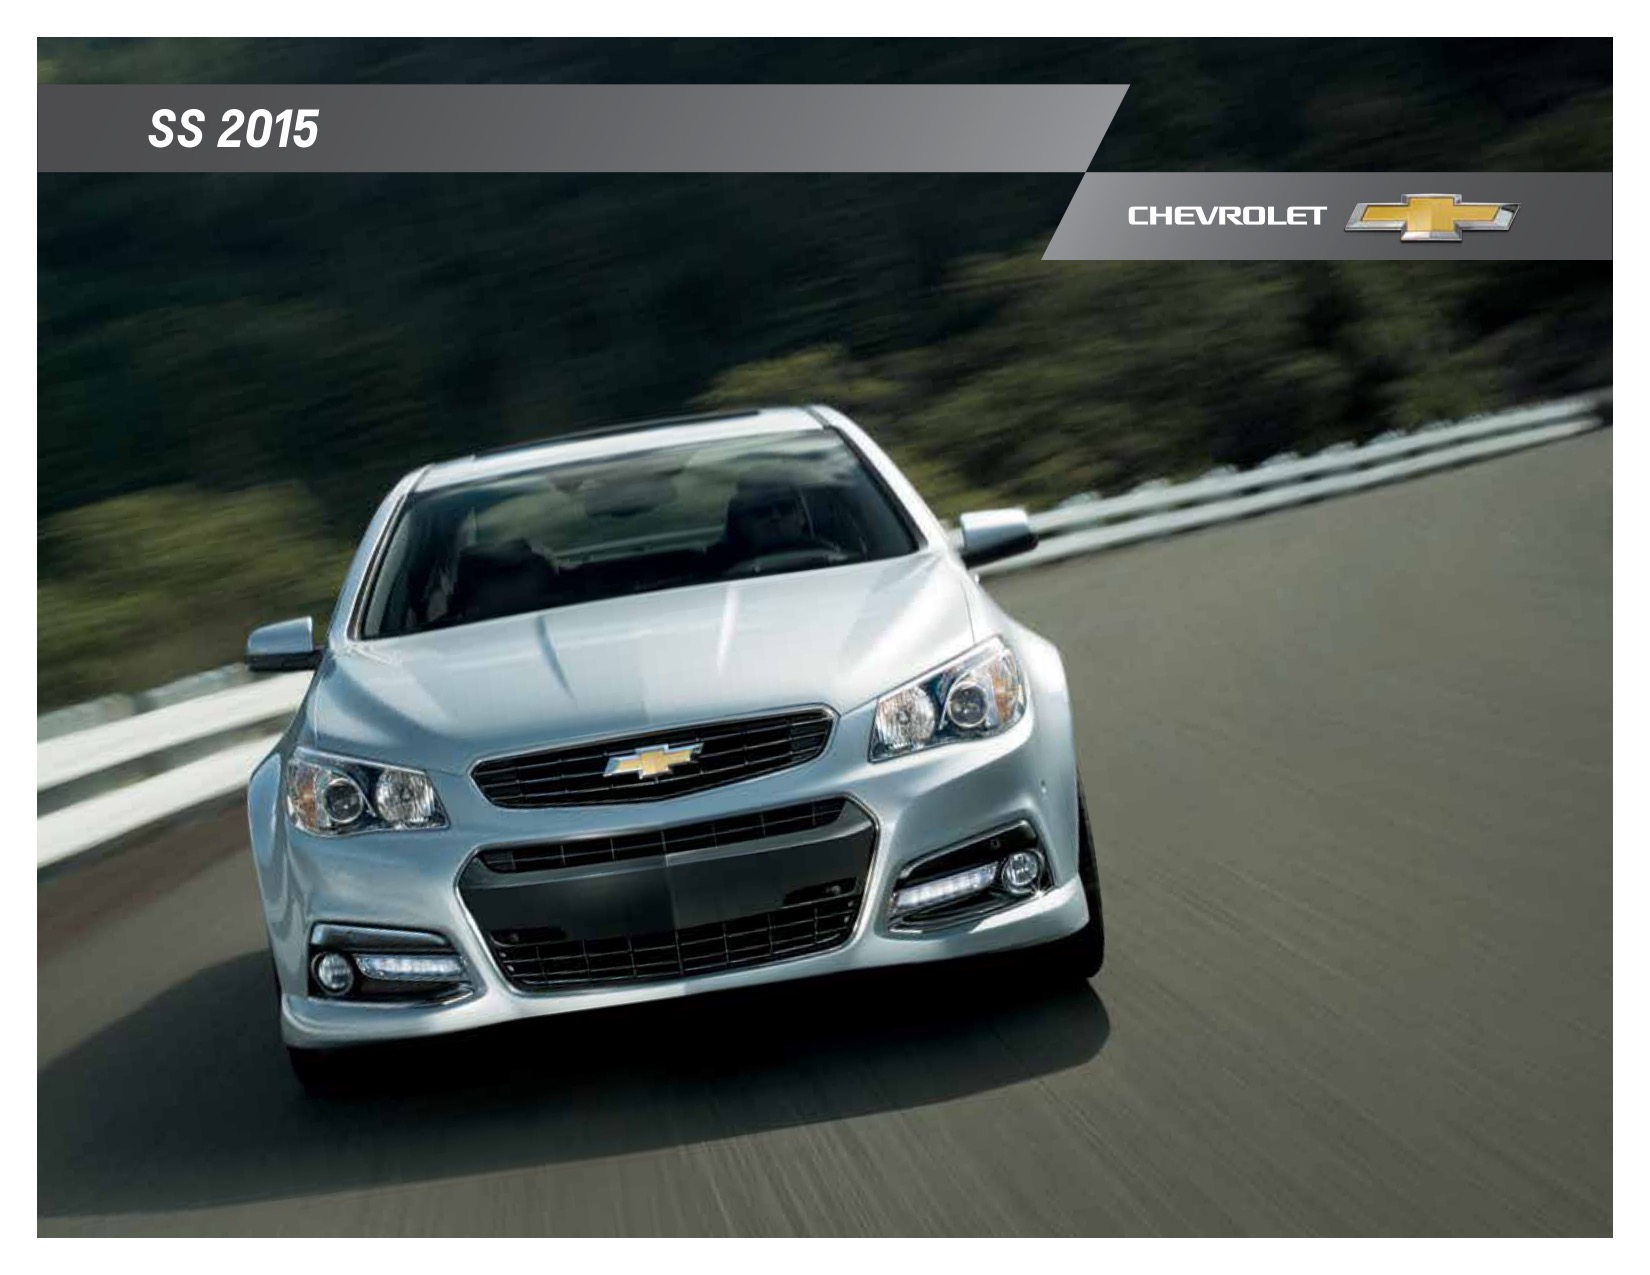 2015 Chevrolet SS Brochure